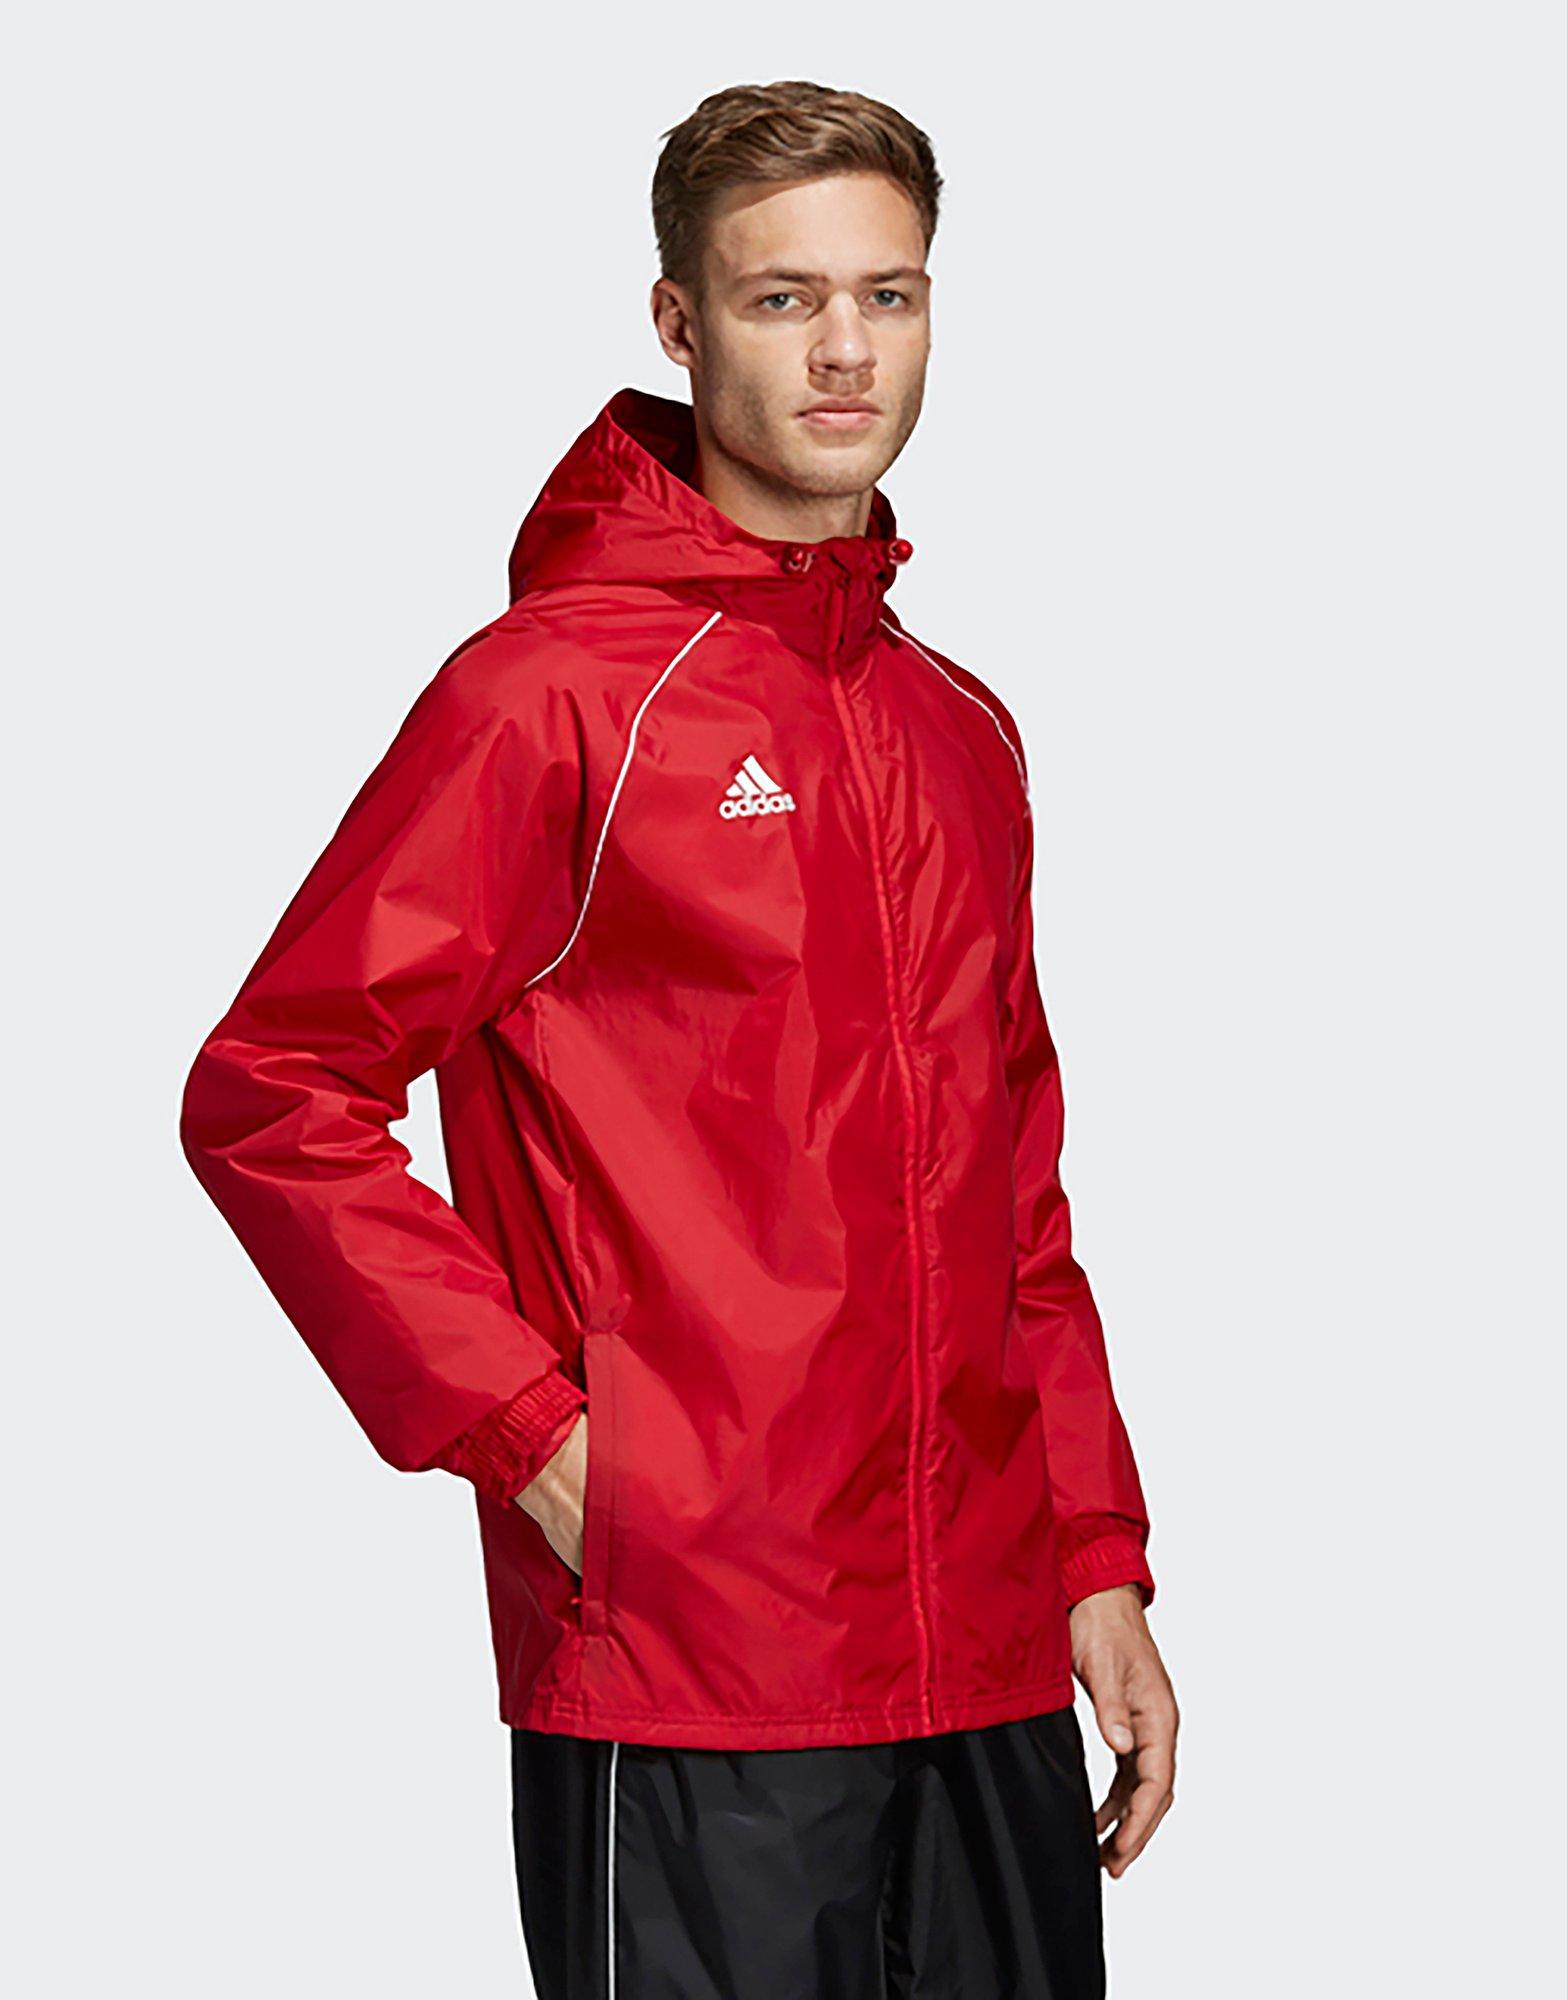 adidas performance core 18 rain jacket